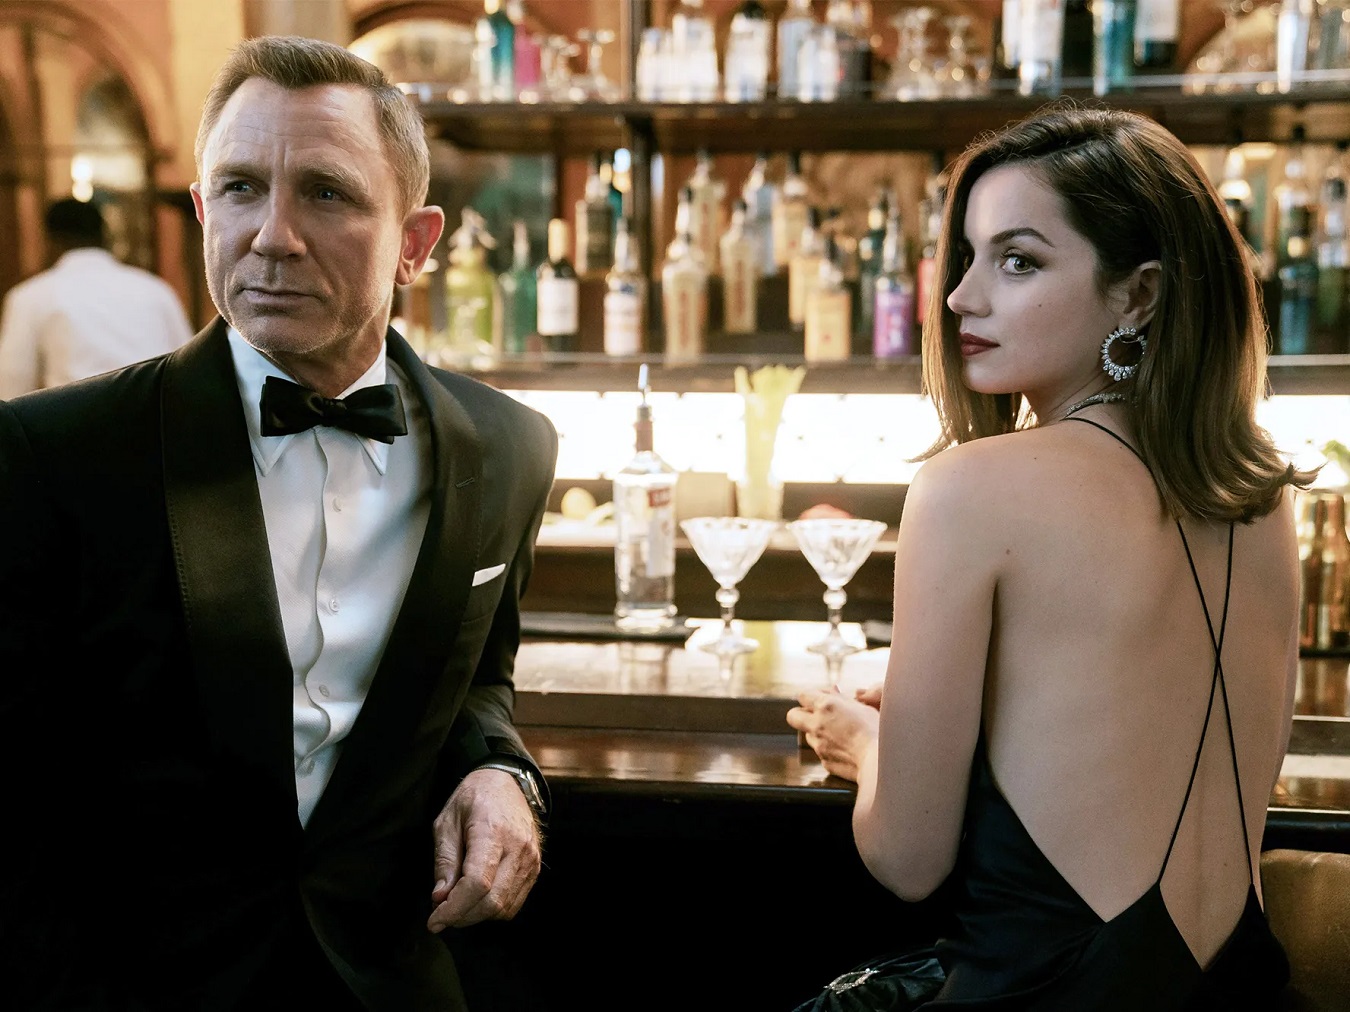 People 1350x1012 Ana de Armas Daniel Craig actor actress bar No Time To Die 007 James Bond women men